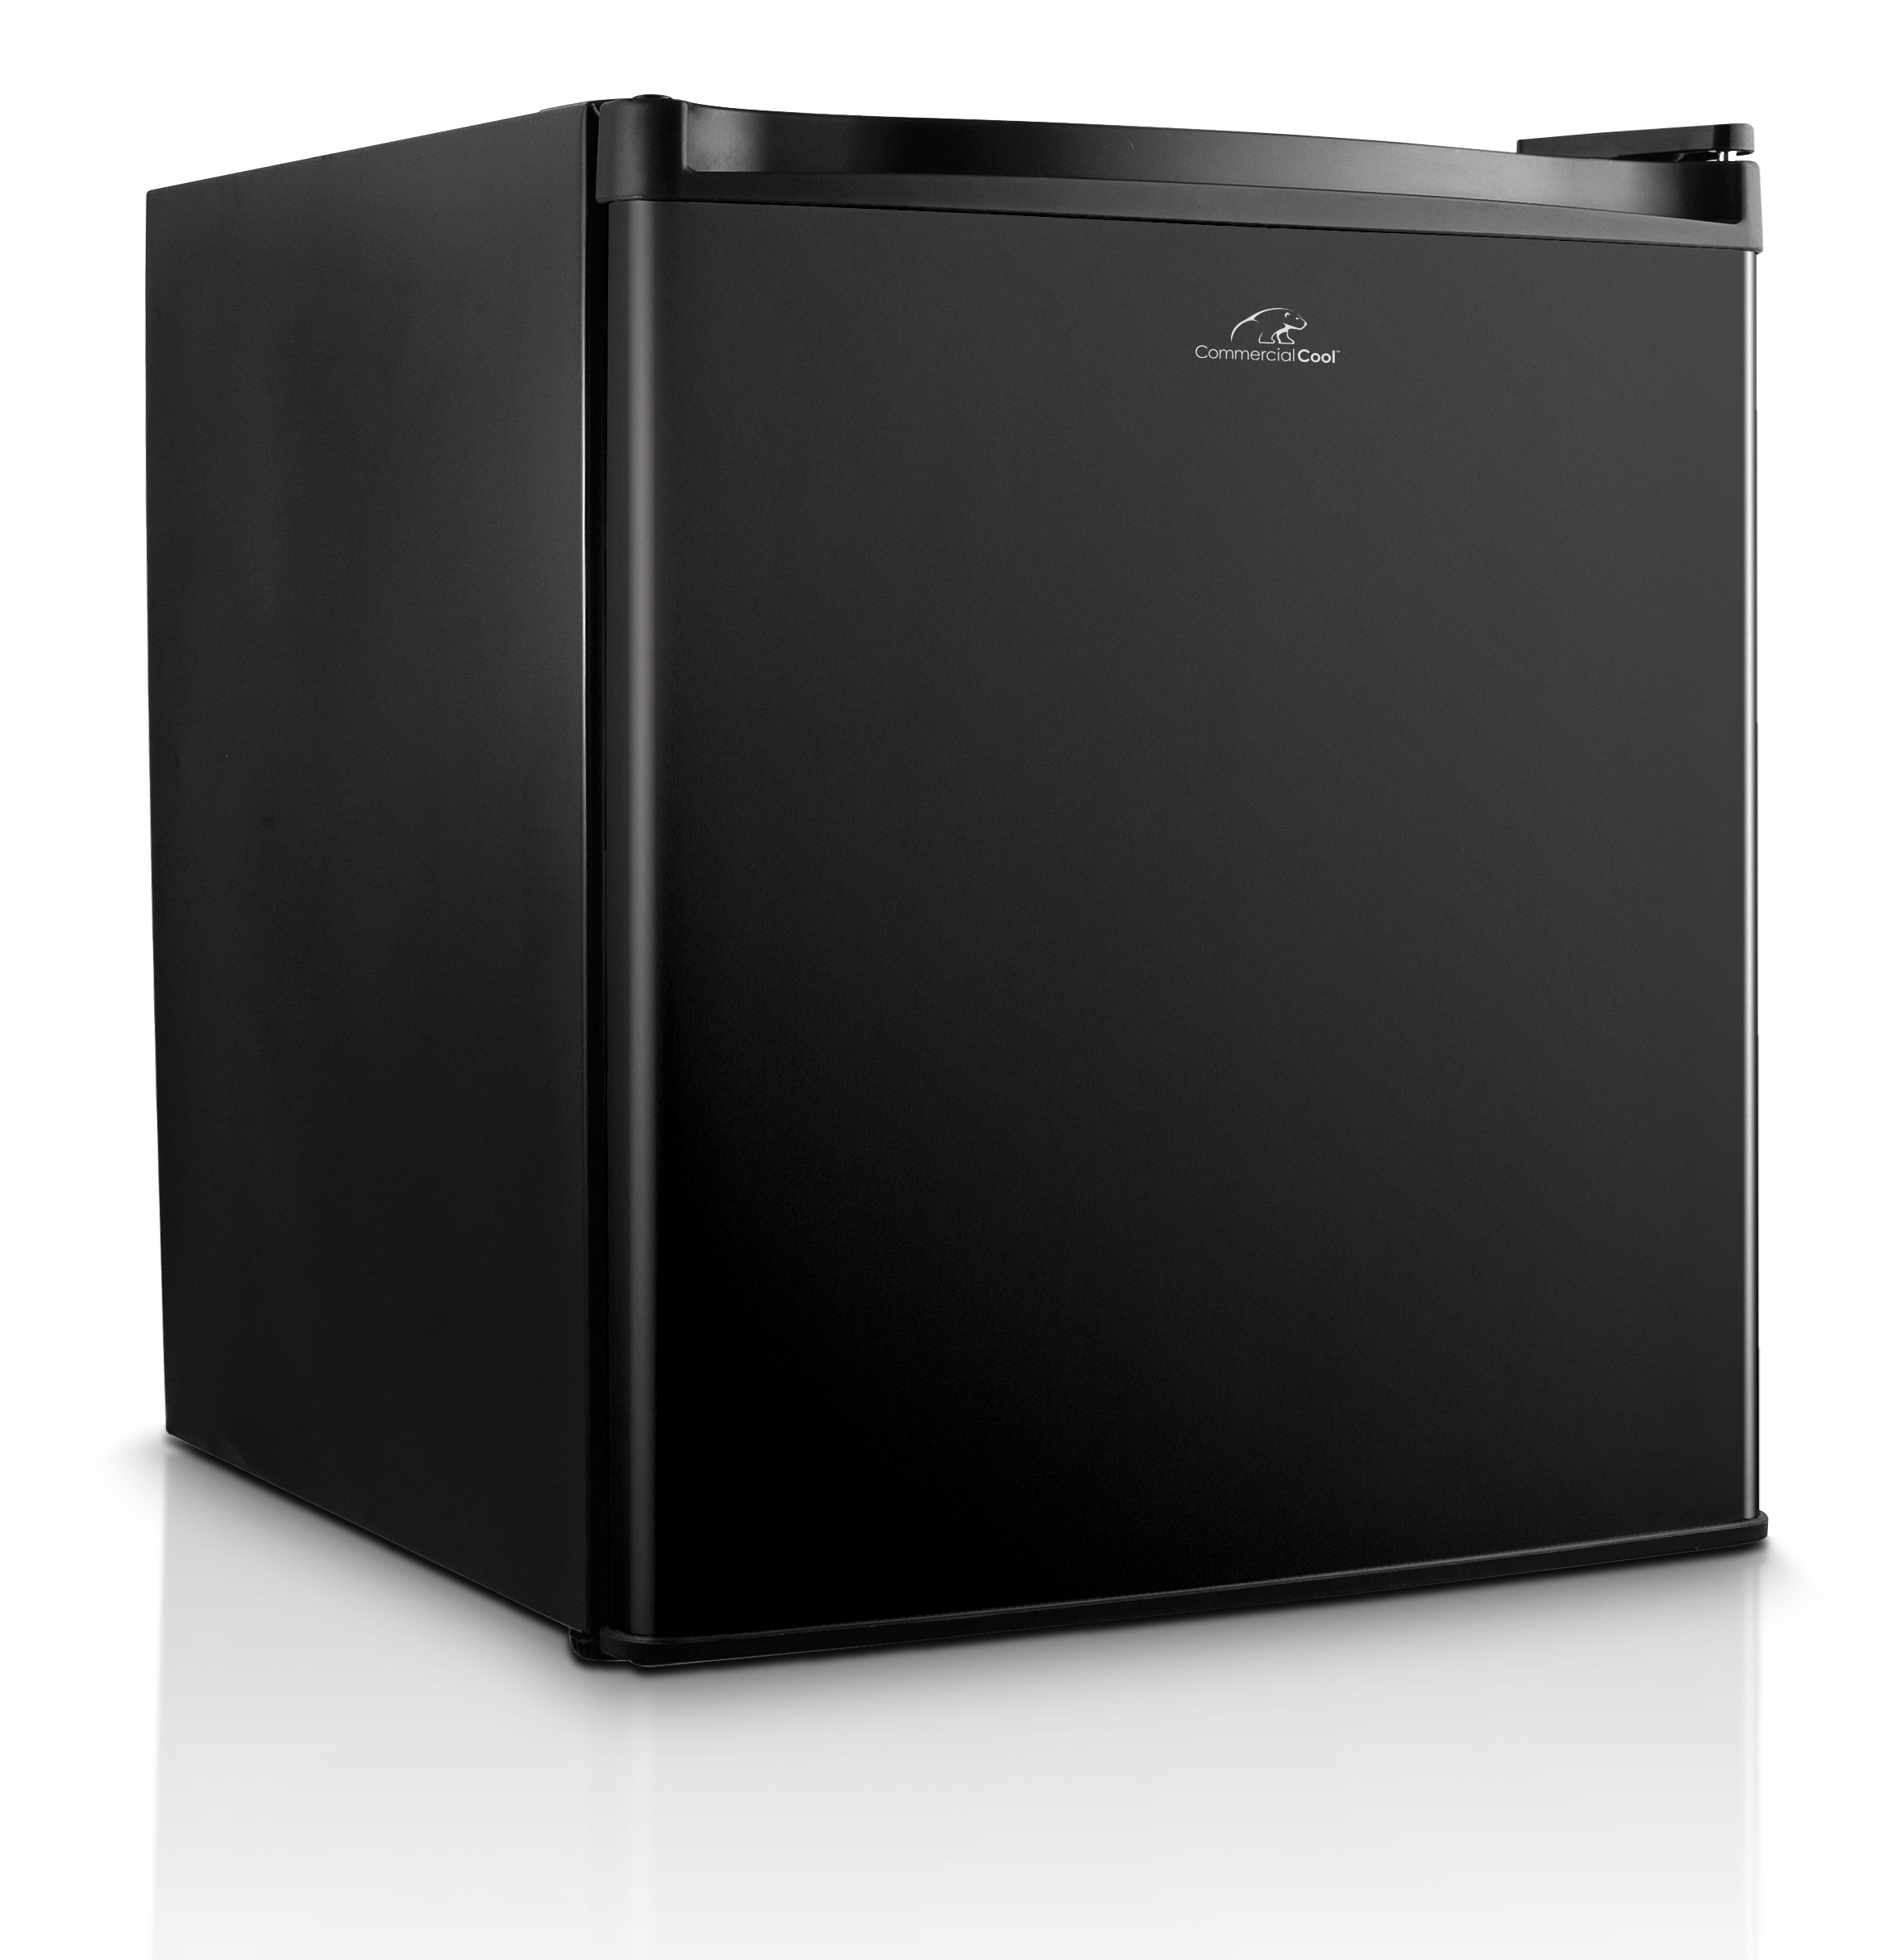 COMMERCIAL COOL Refridgerator and Freezer 1.6 Cu. Ft., Black